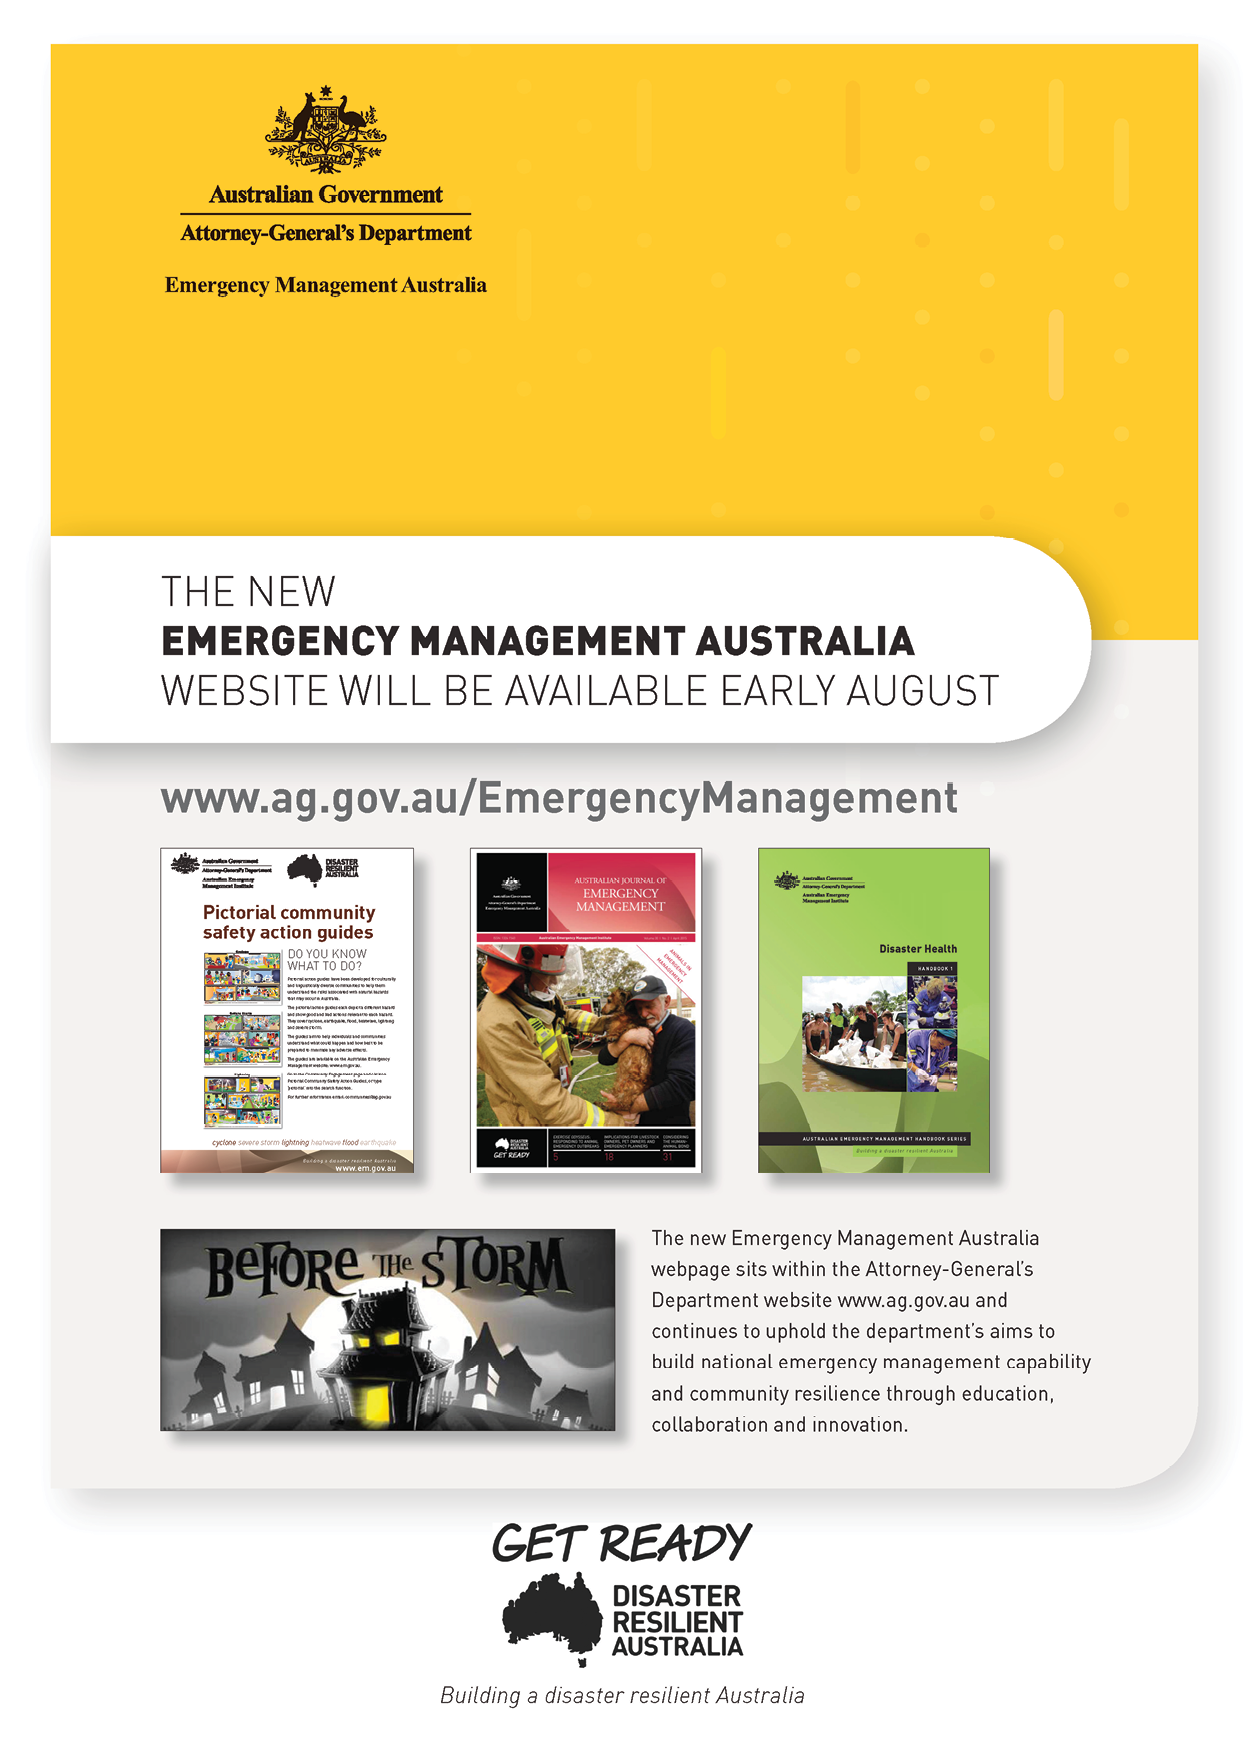 Advertisement for Emergency Management Australia website